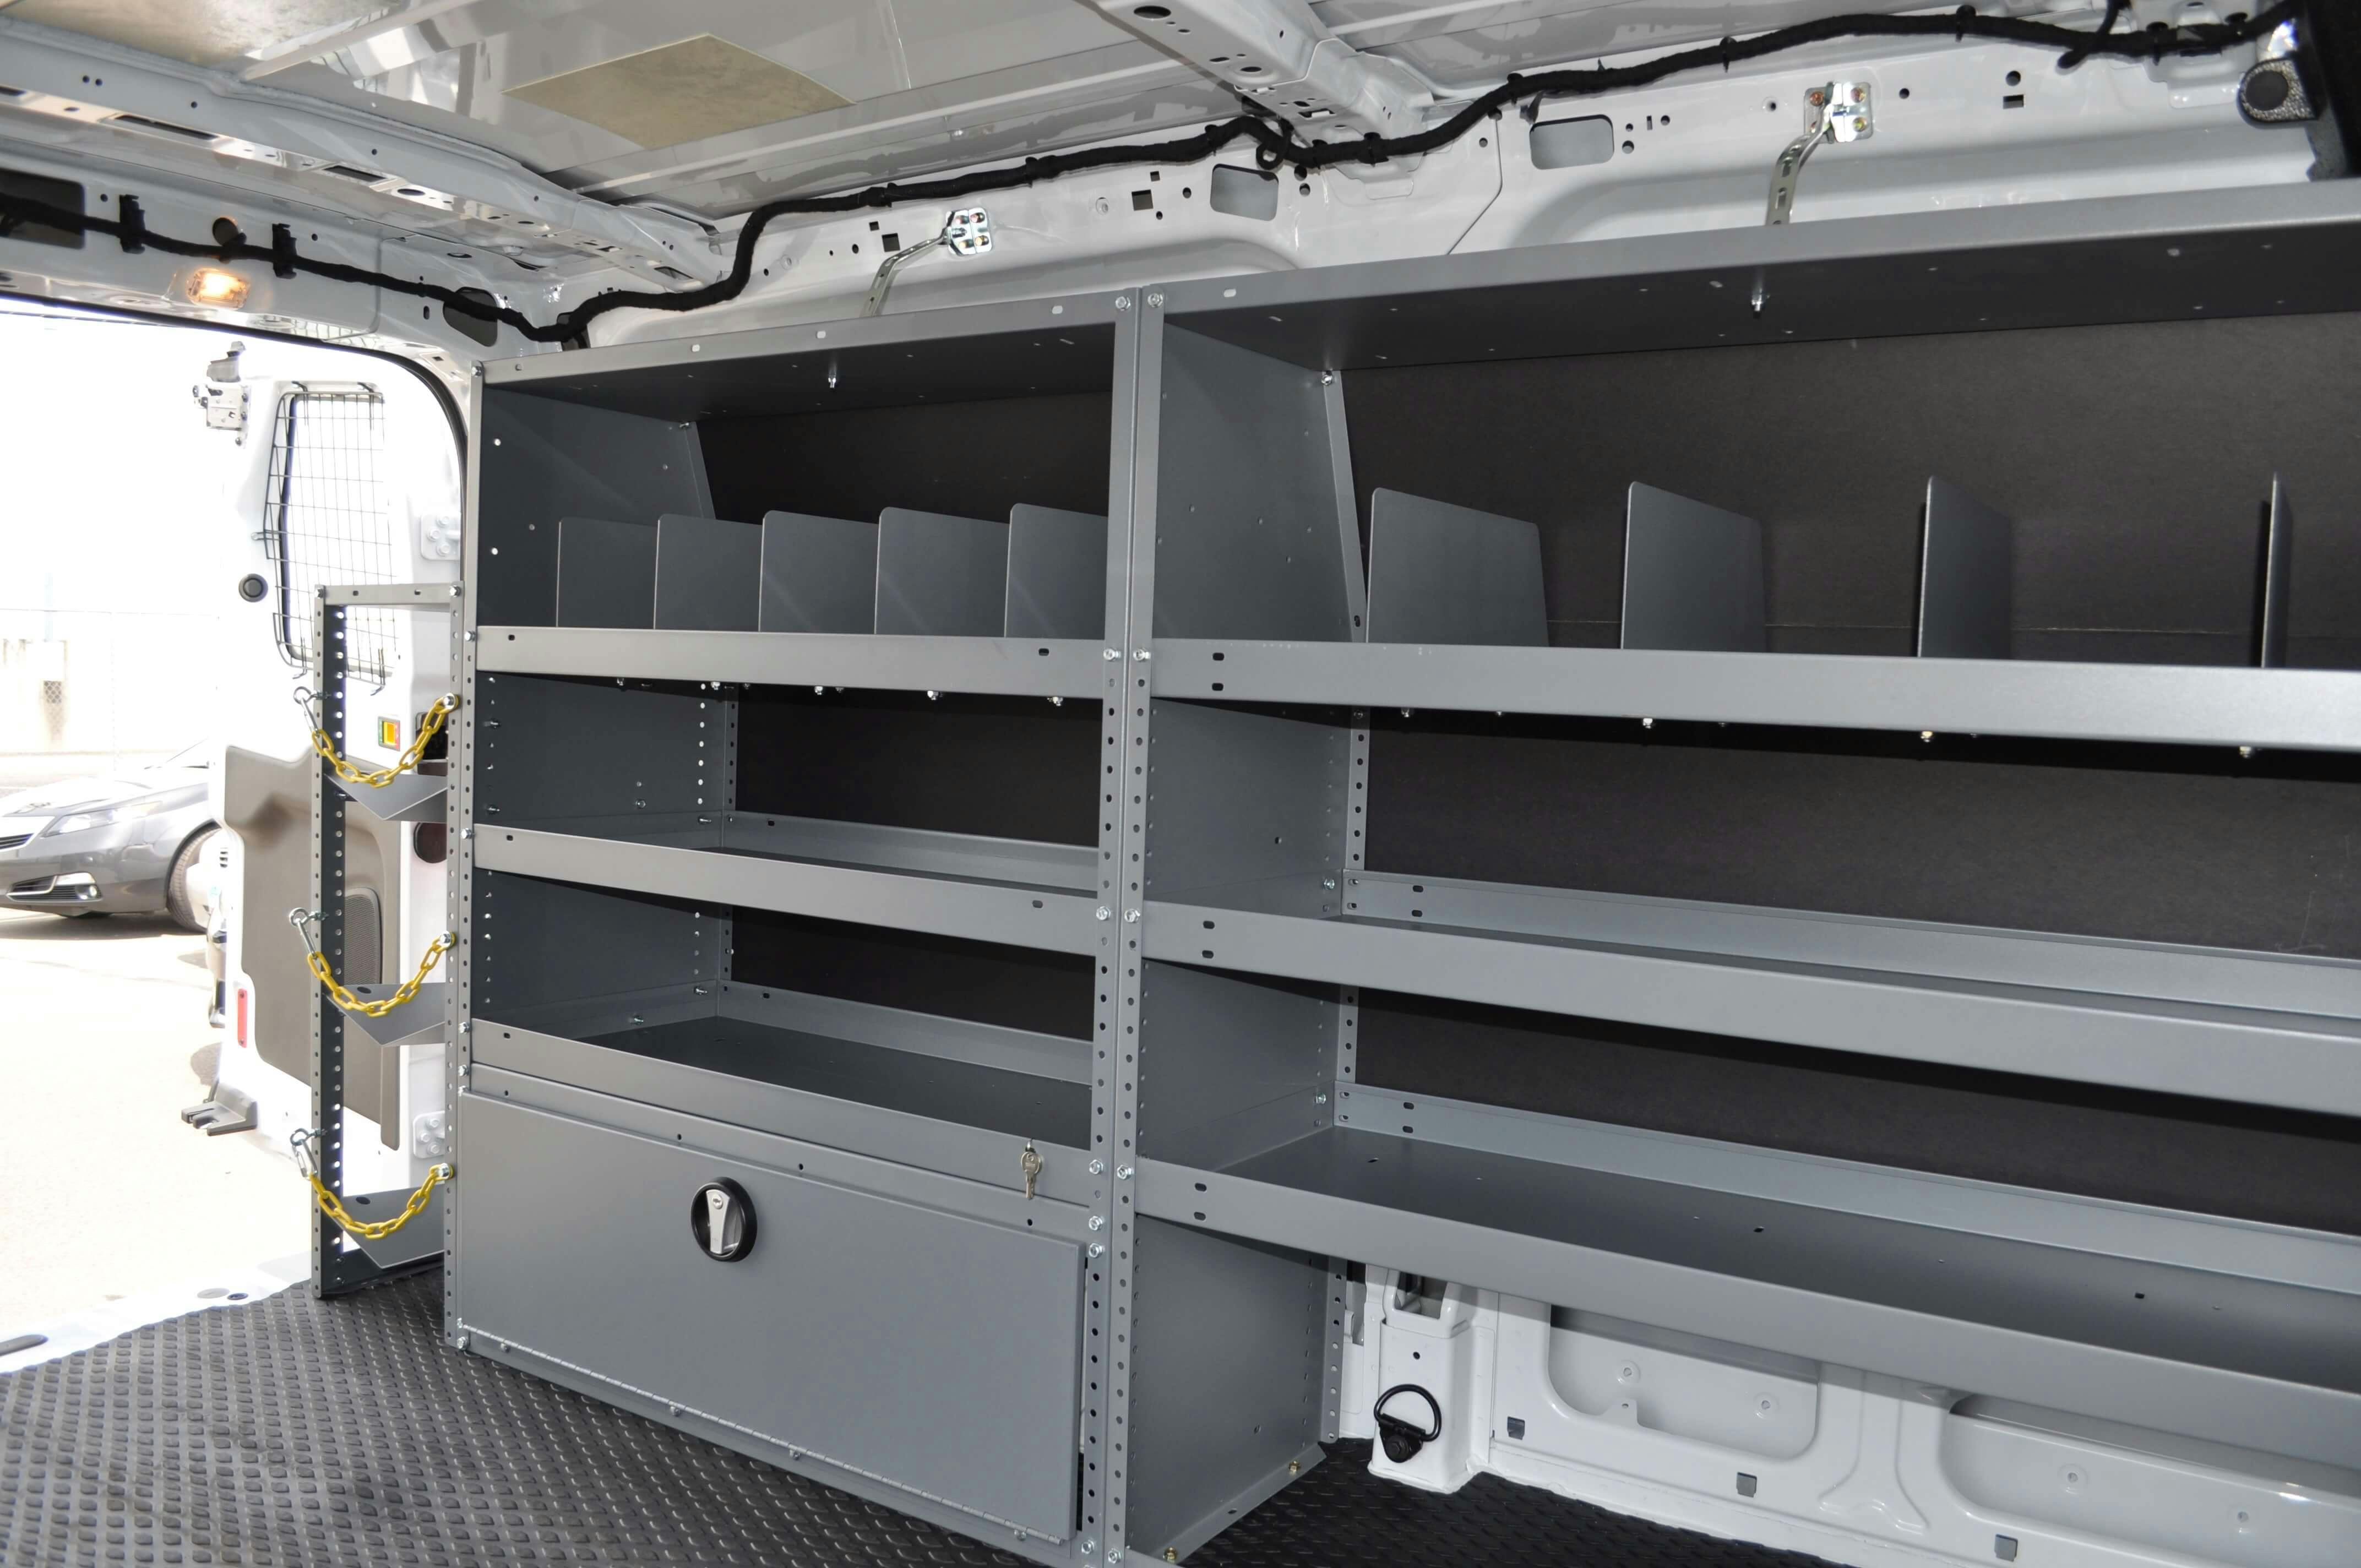 Van Shelving And Storage Bins, Food Truck Shelving Ideas